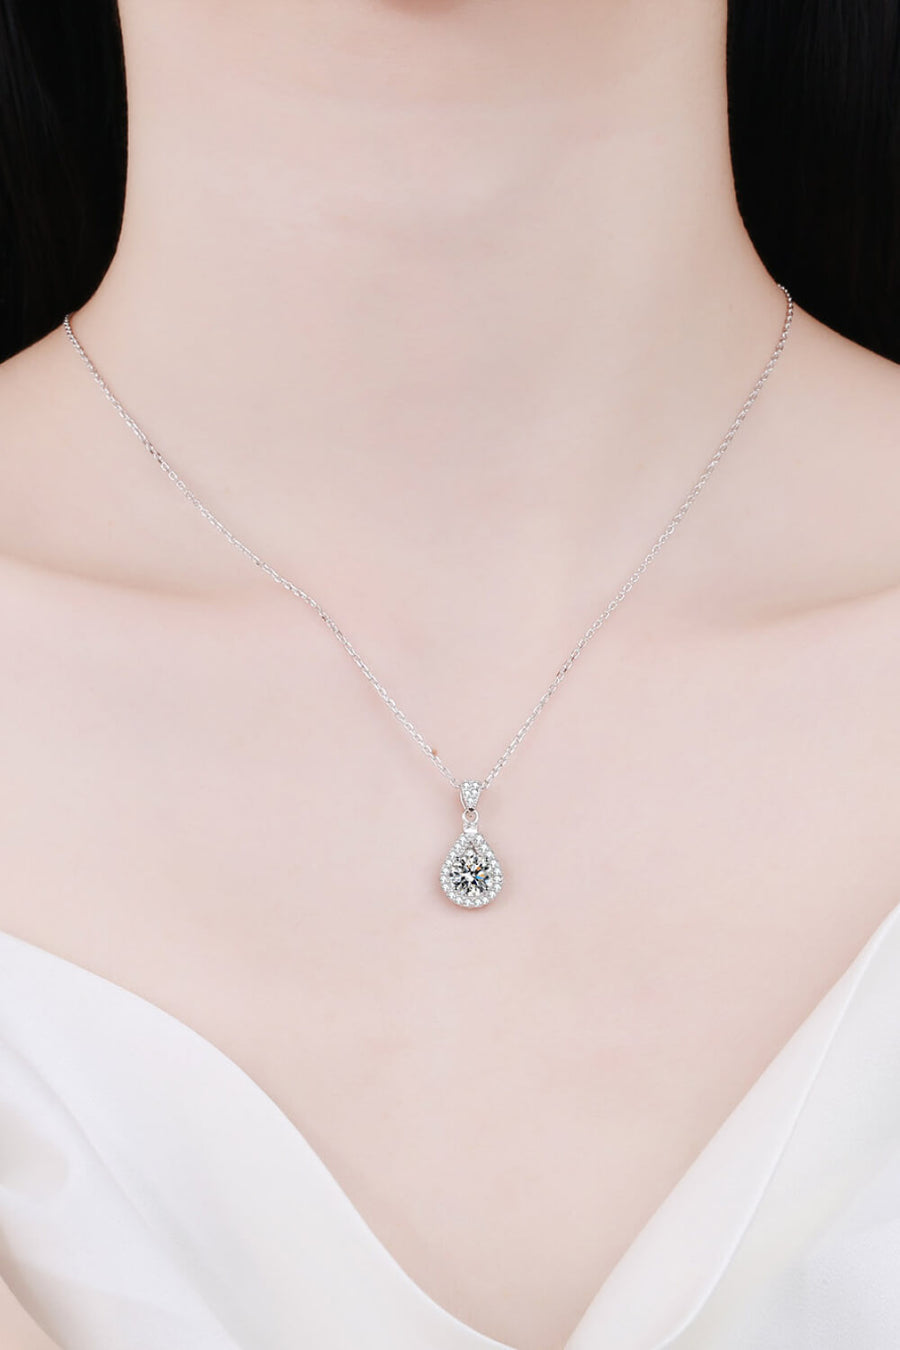 Best Diamond Necklace Jewelry Gifts for Women | 1 Carat Diamond Teardrop Pendant Necklace | MASON New York